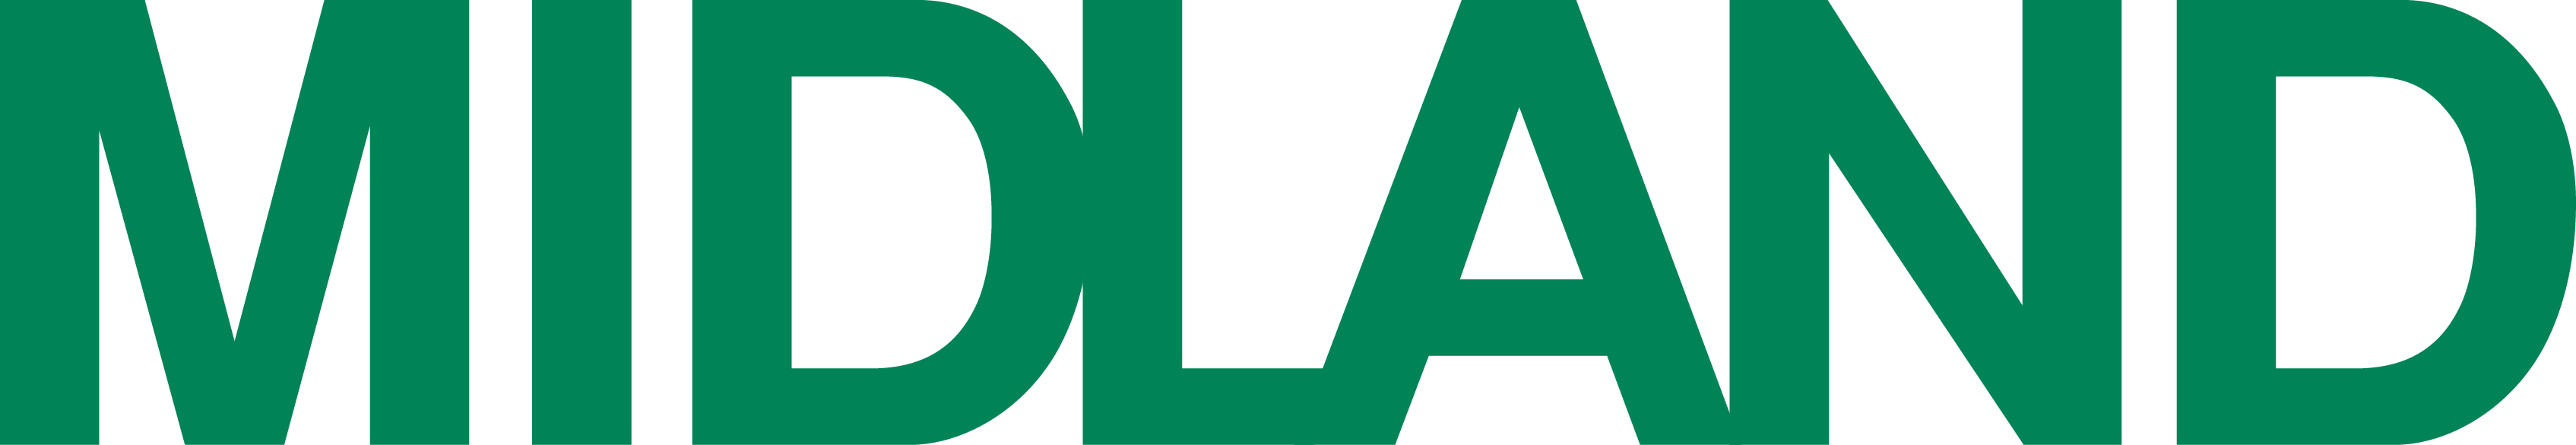 Midland Logo_RGB